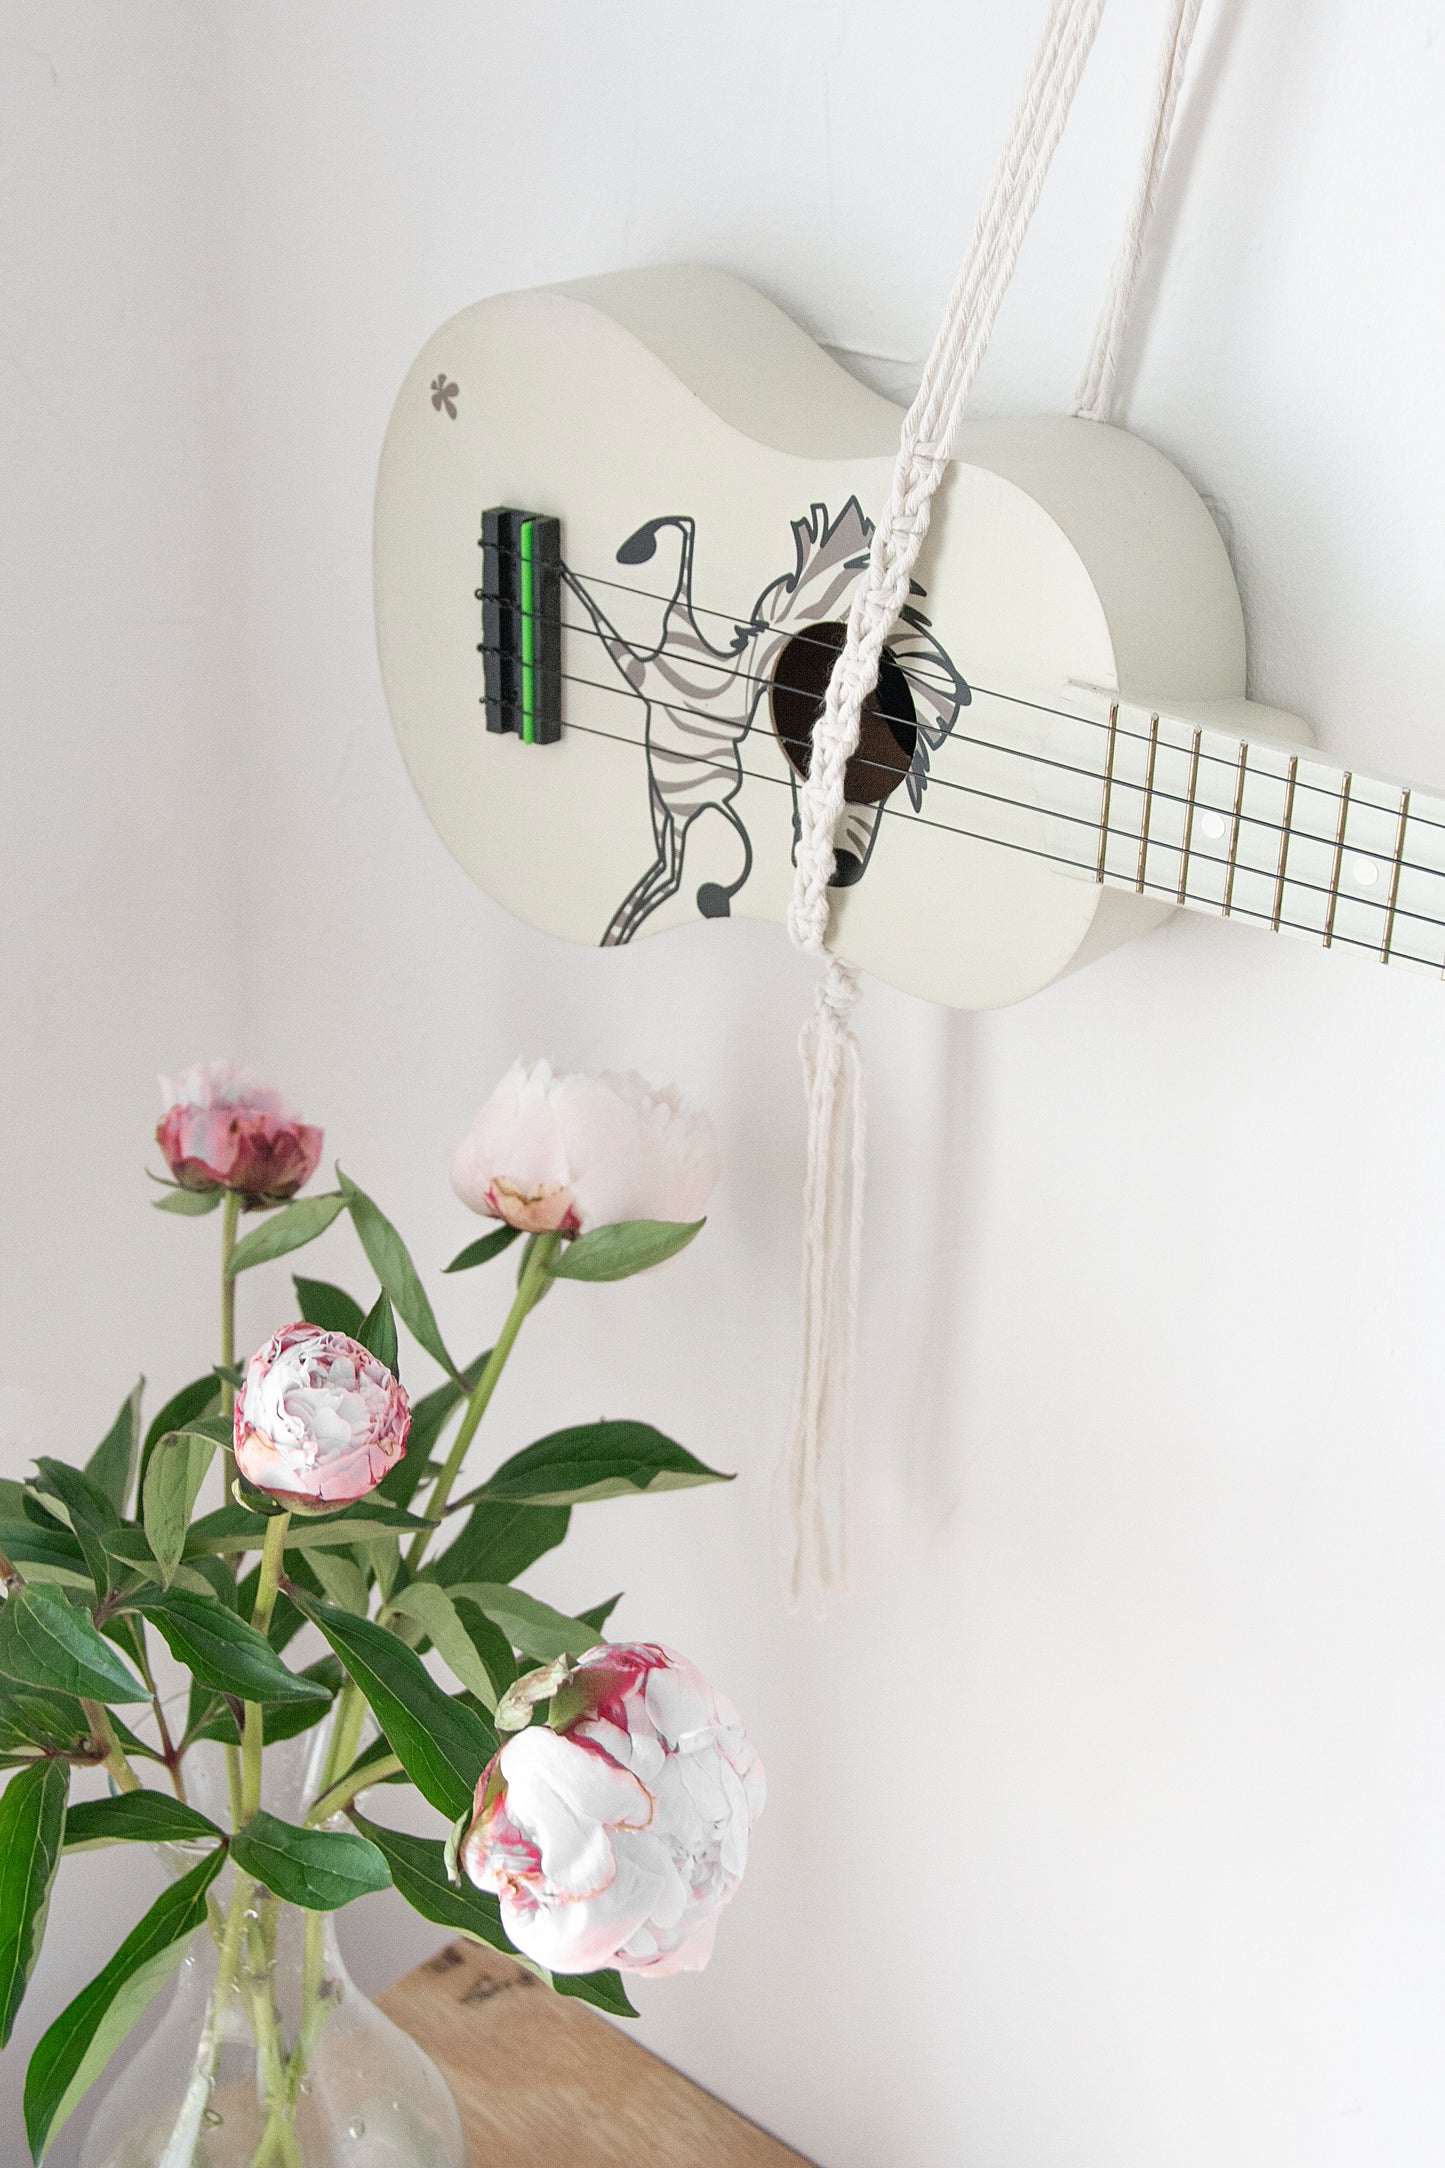 Horizontal hanger for ukulele